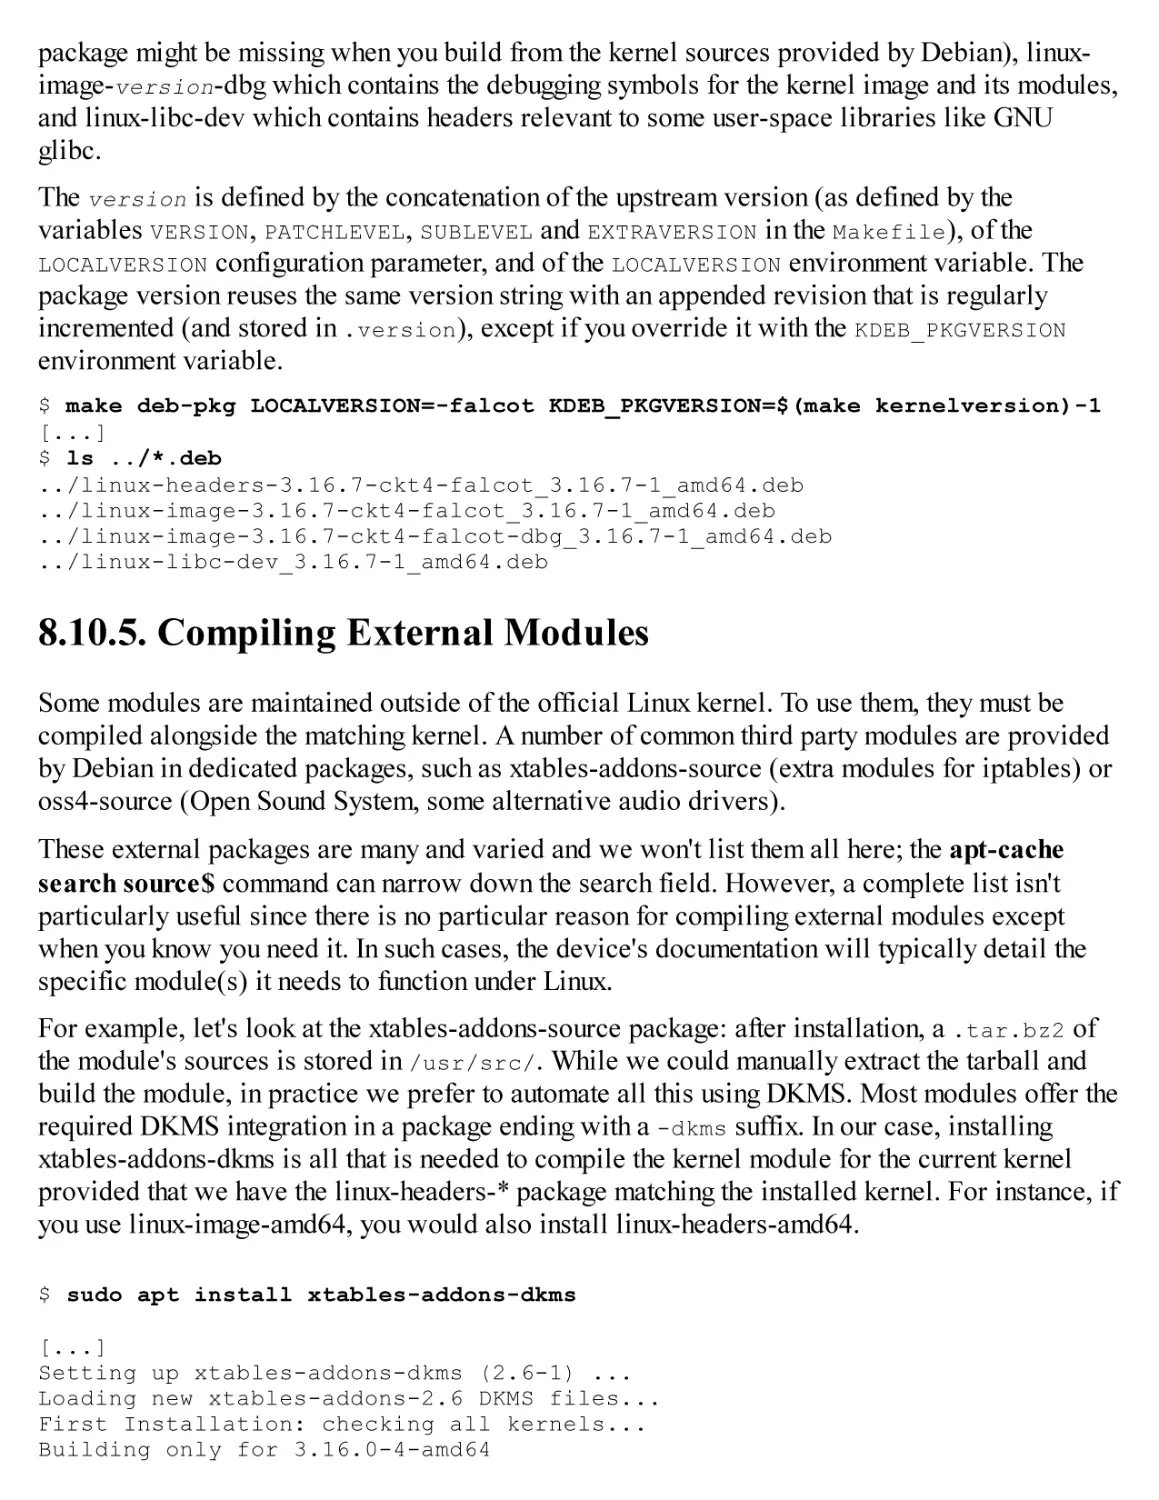 8.10.5. Compiling External Modules